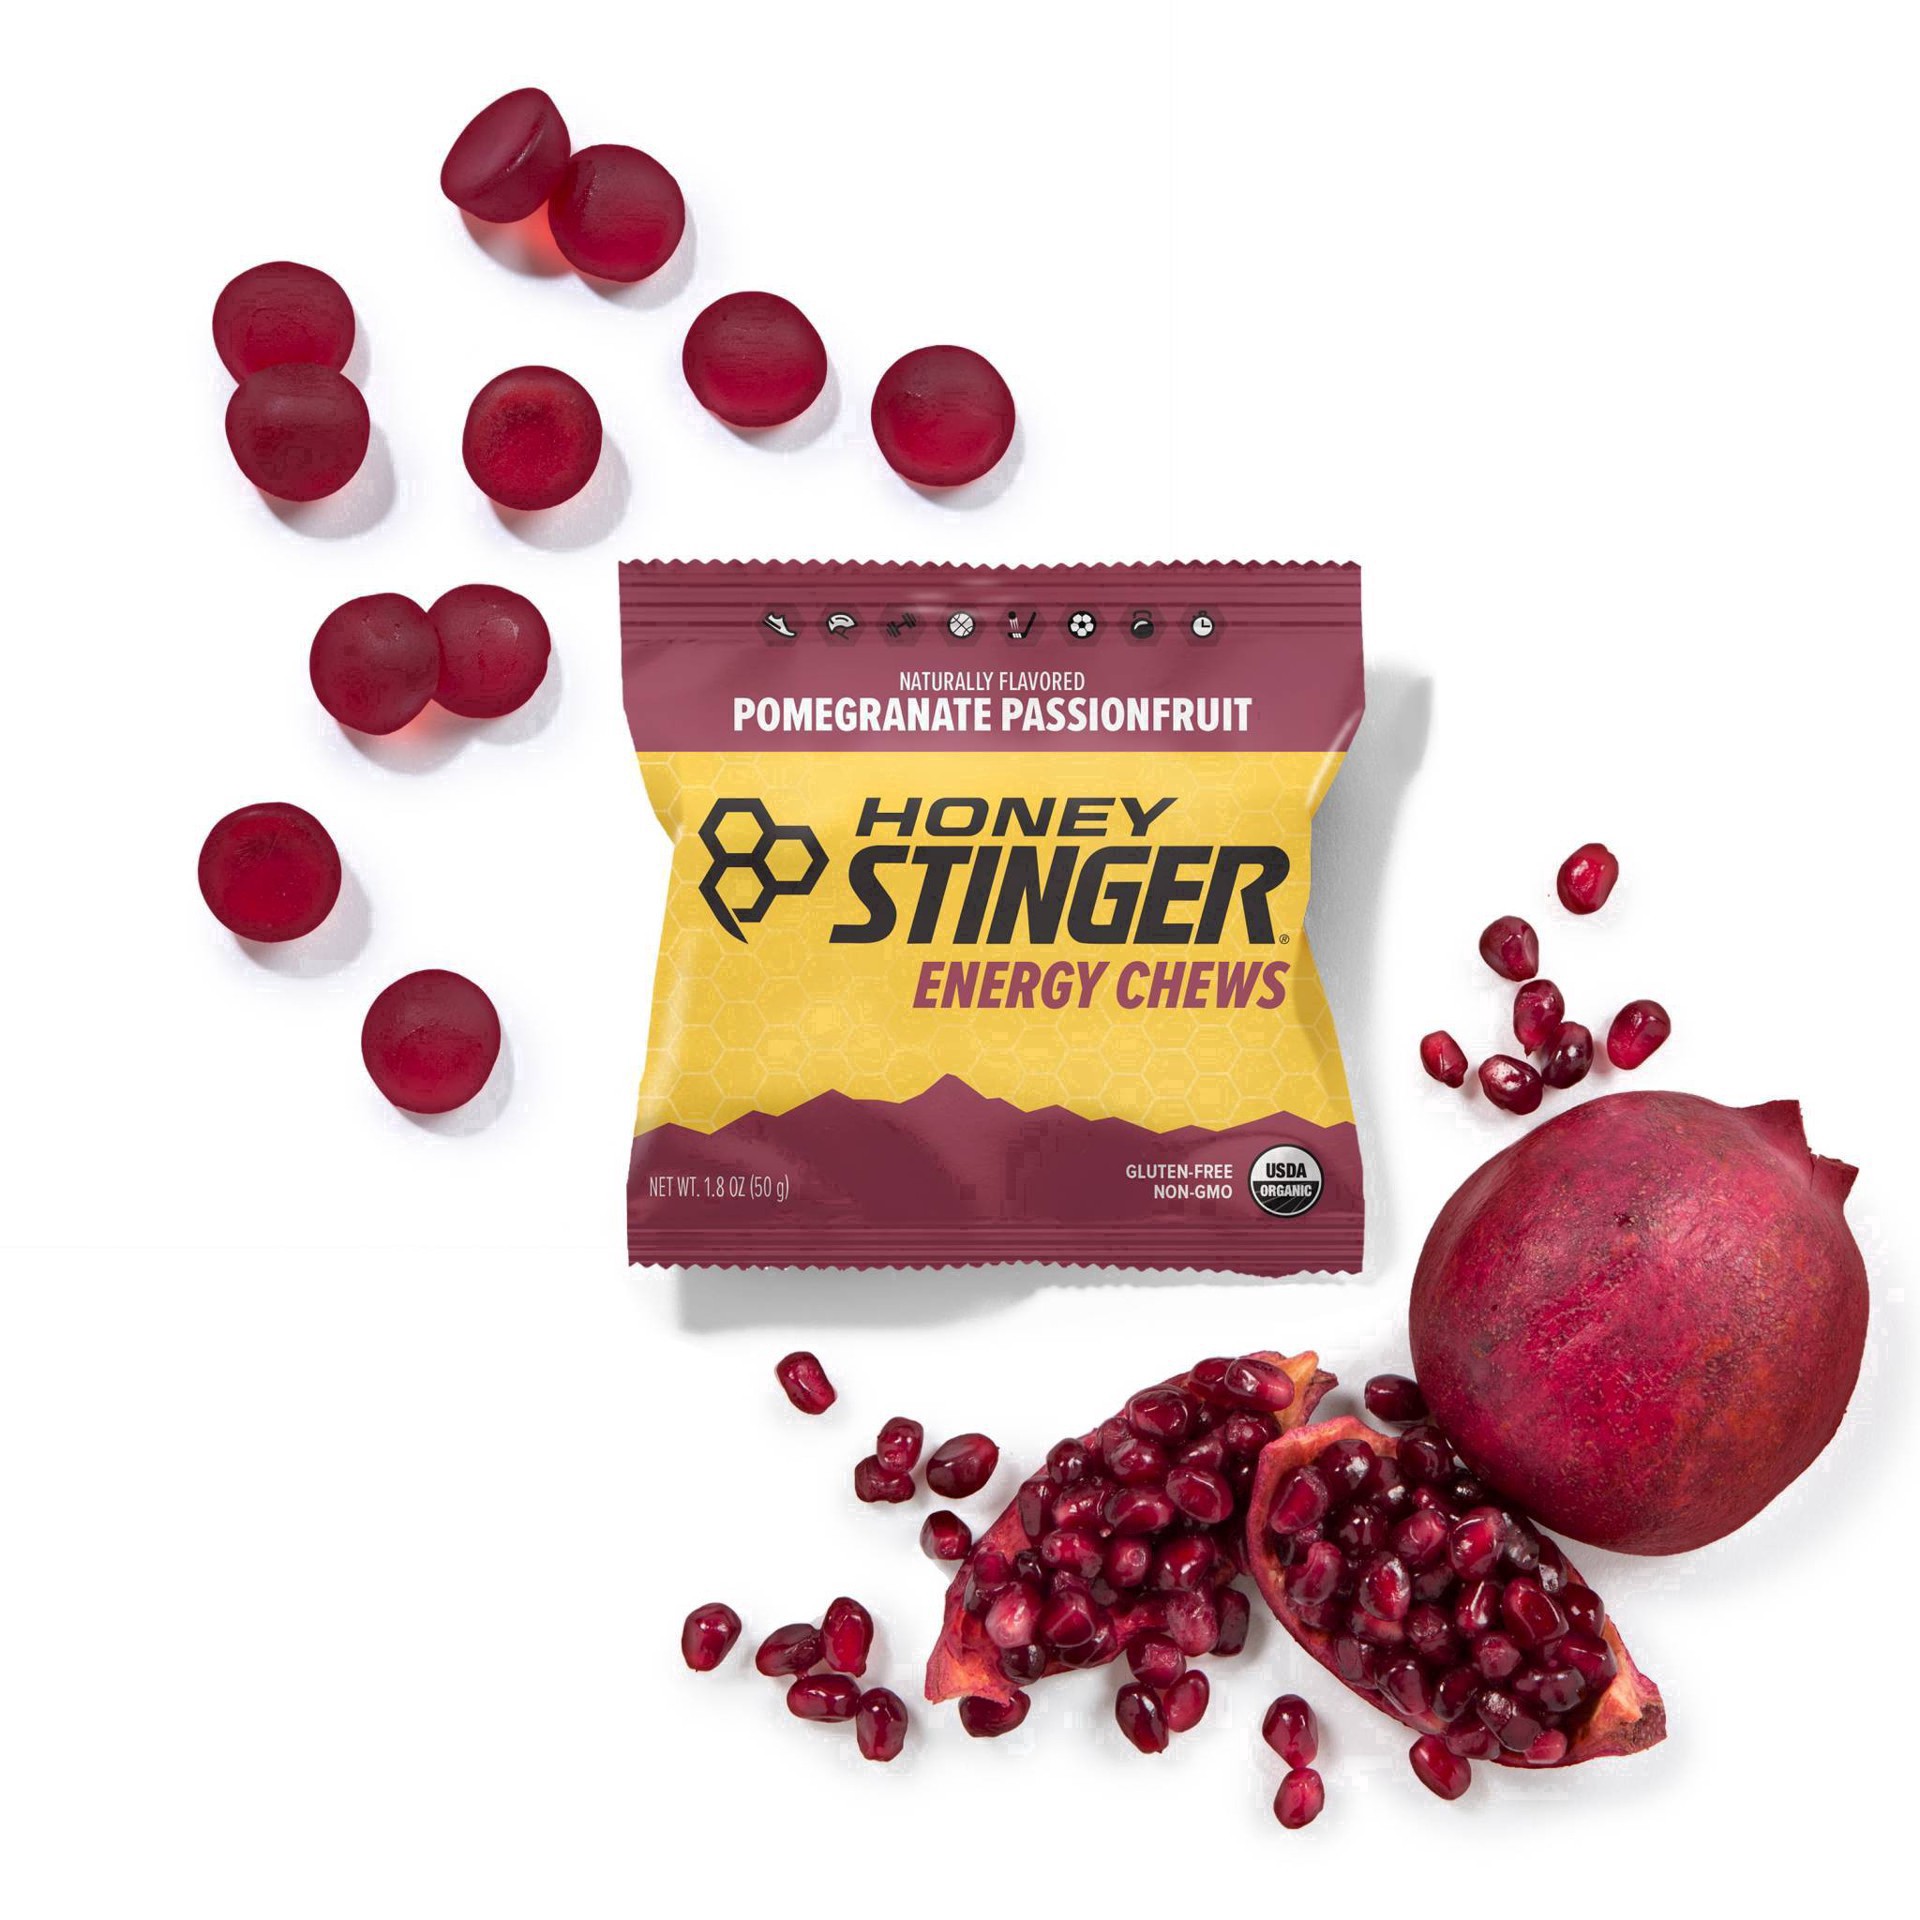 slide 30 of 72, Honey Stinger Pomegranate Passionfruit Energy Chews 1.8 oz, 1.8 oz